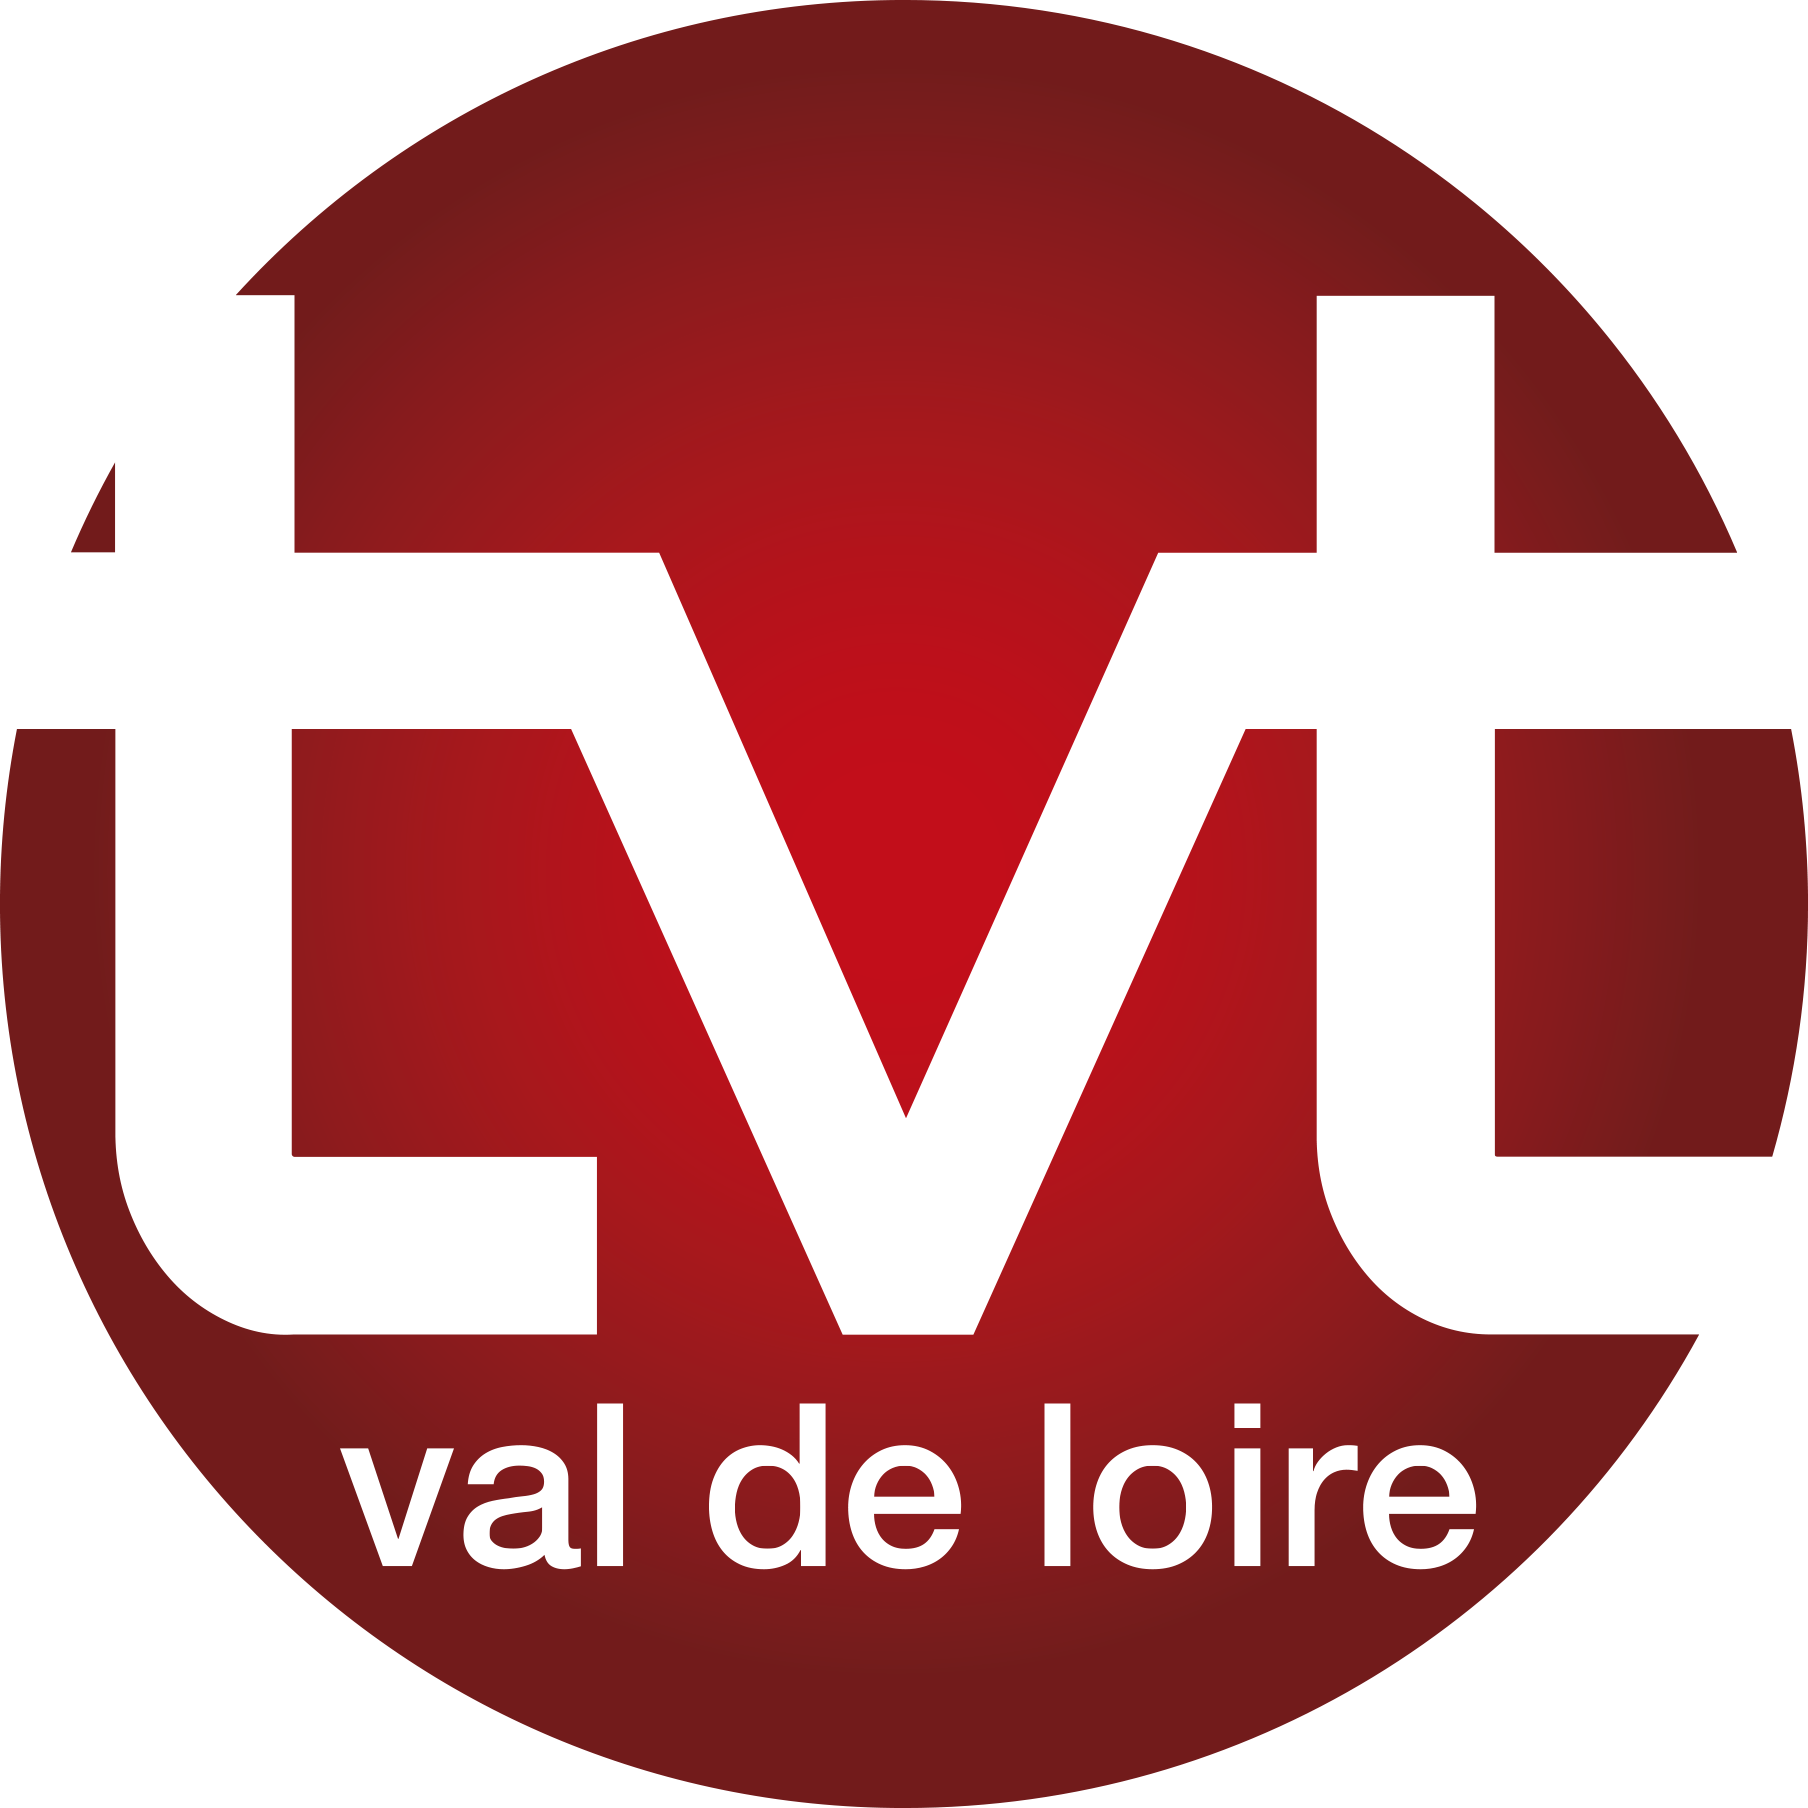 Logo_tvt_2016_RVB.png